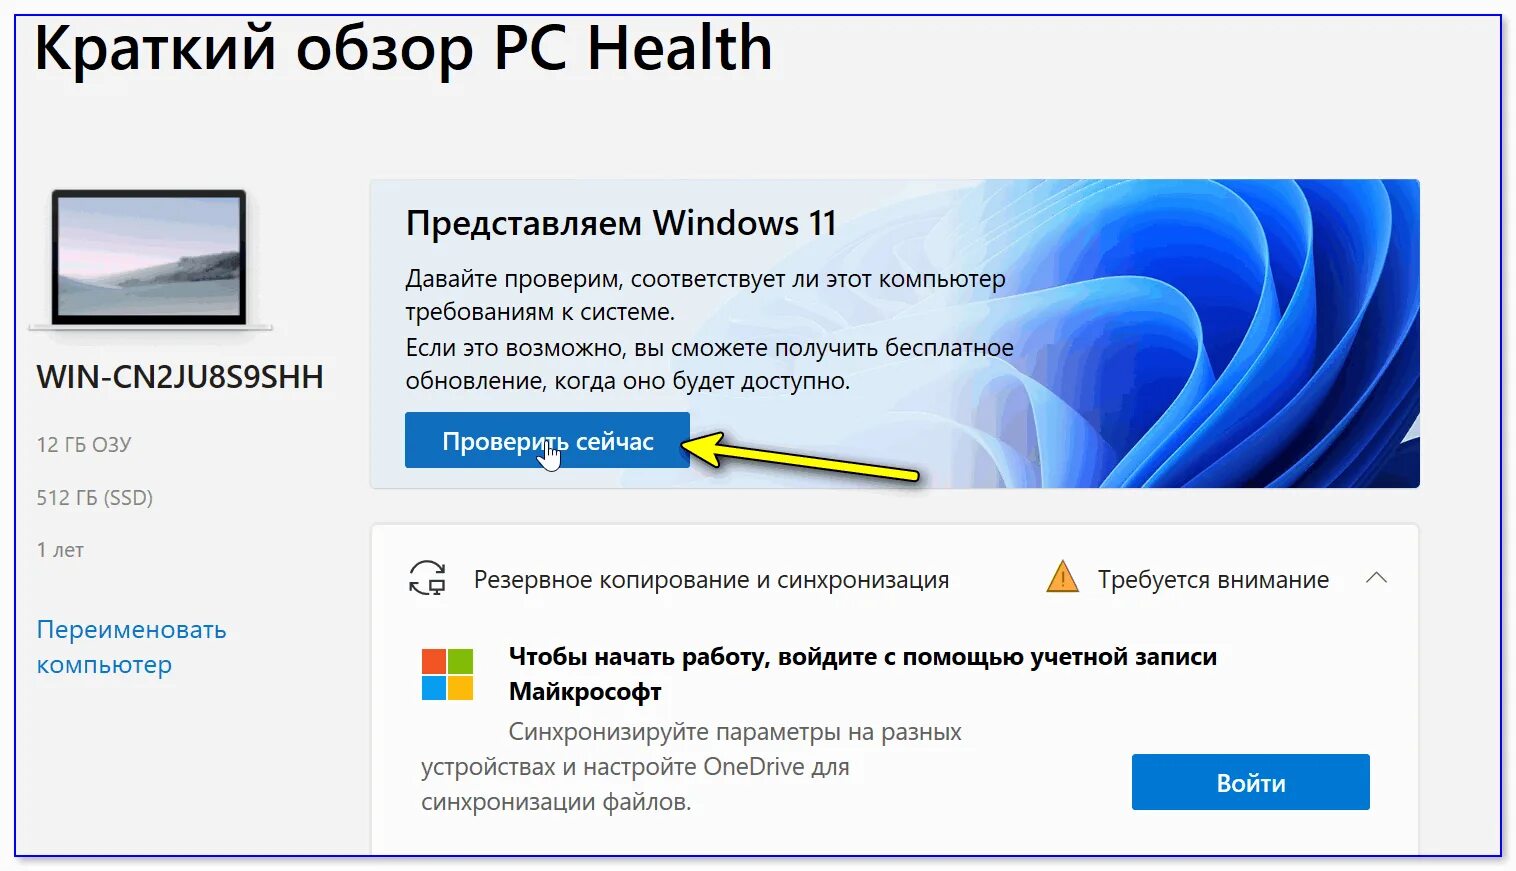 Проверка работоспособности пк windows 11. Windows 11 компьютер. Проверка работоспособности ПК Windows. Windows 11 проверка совместимости. PC Health check Windows 11.